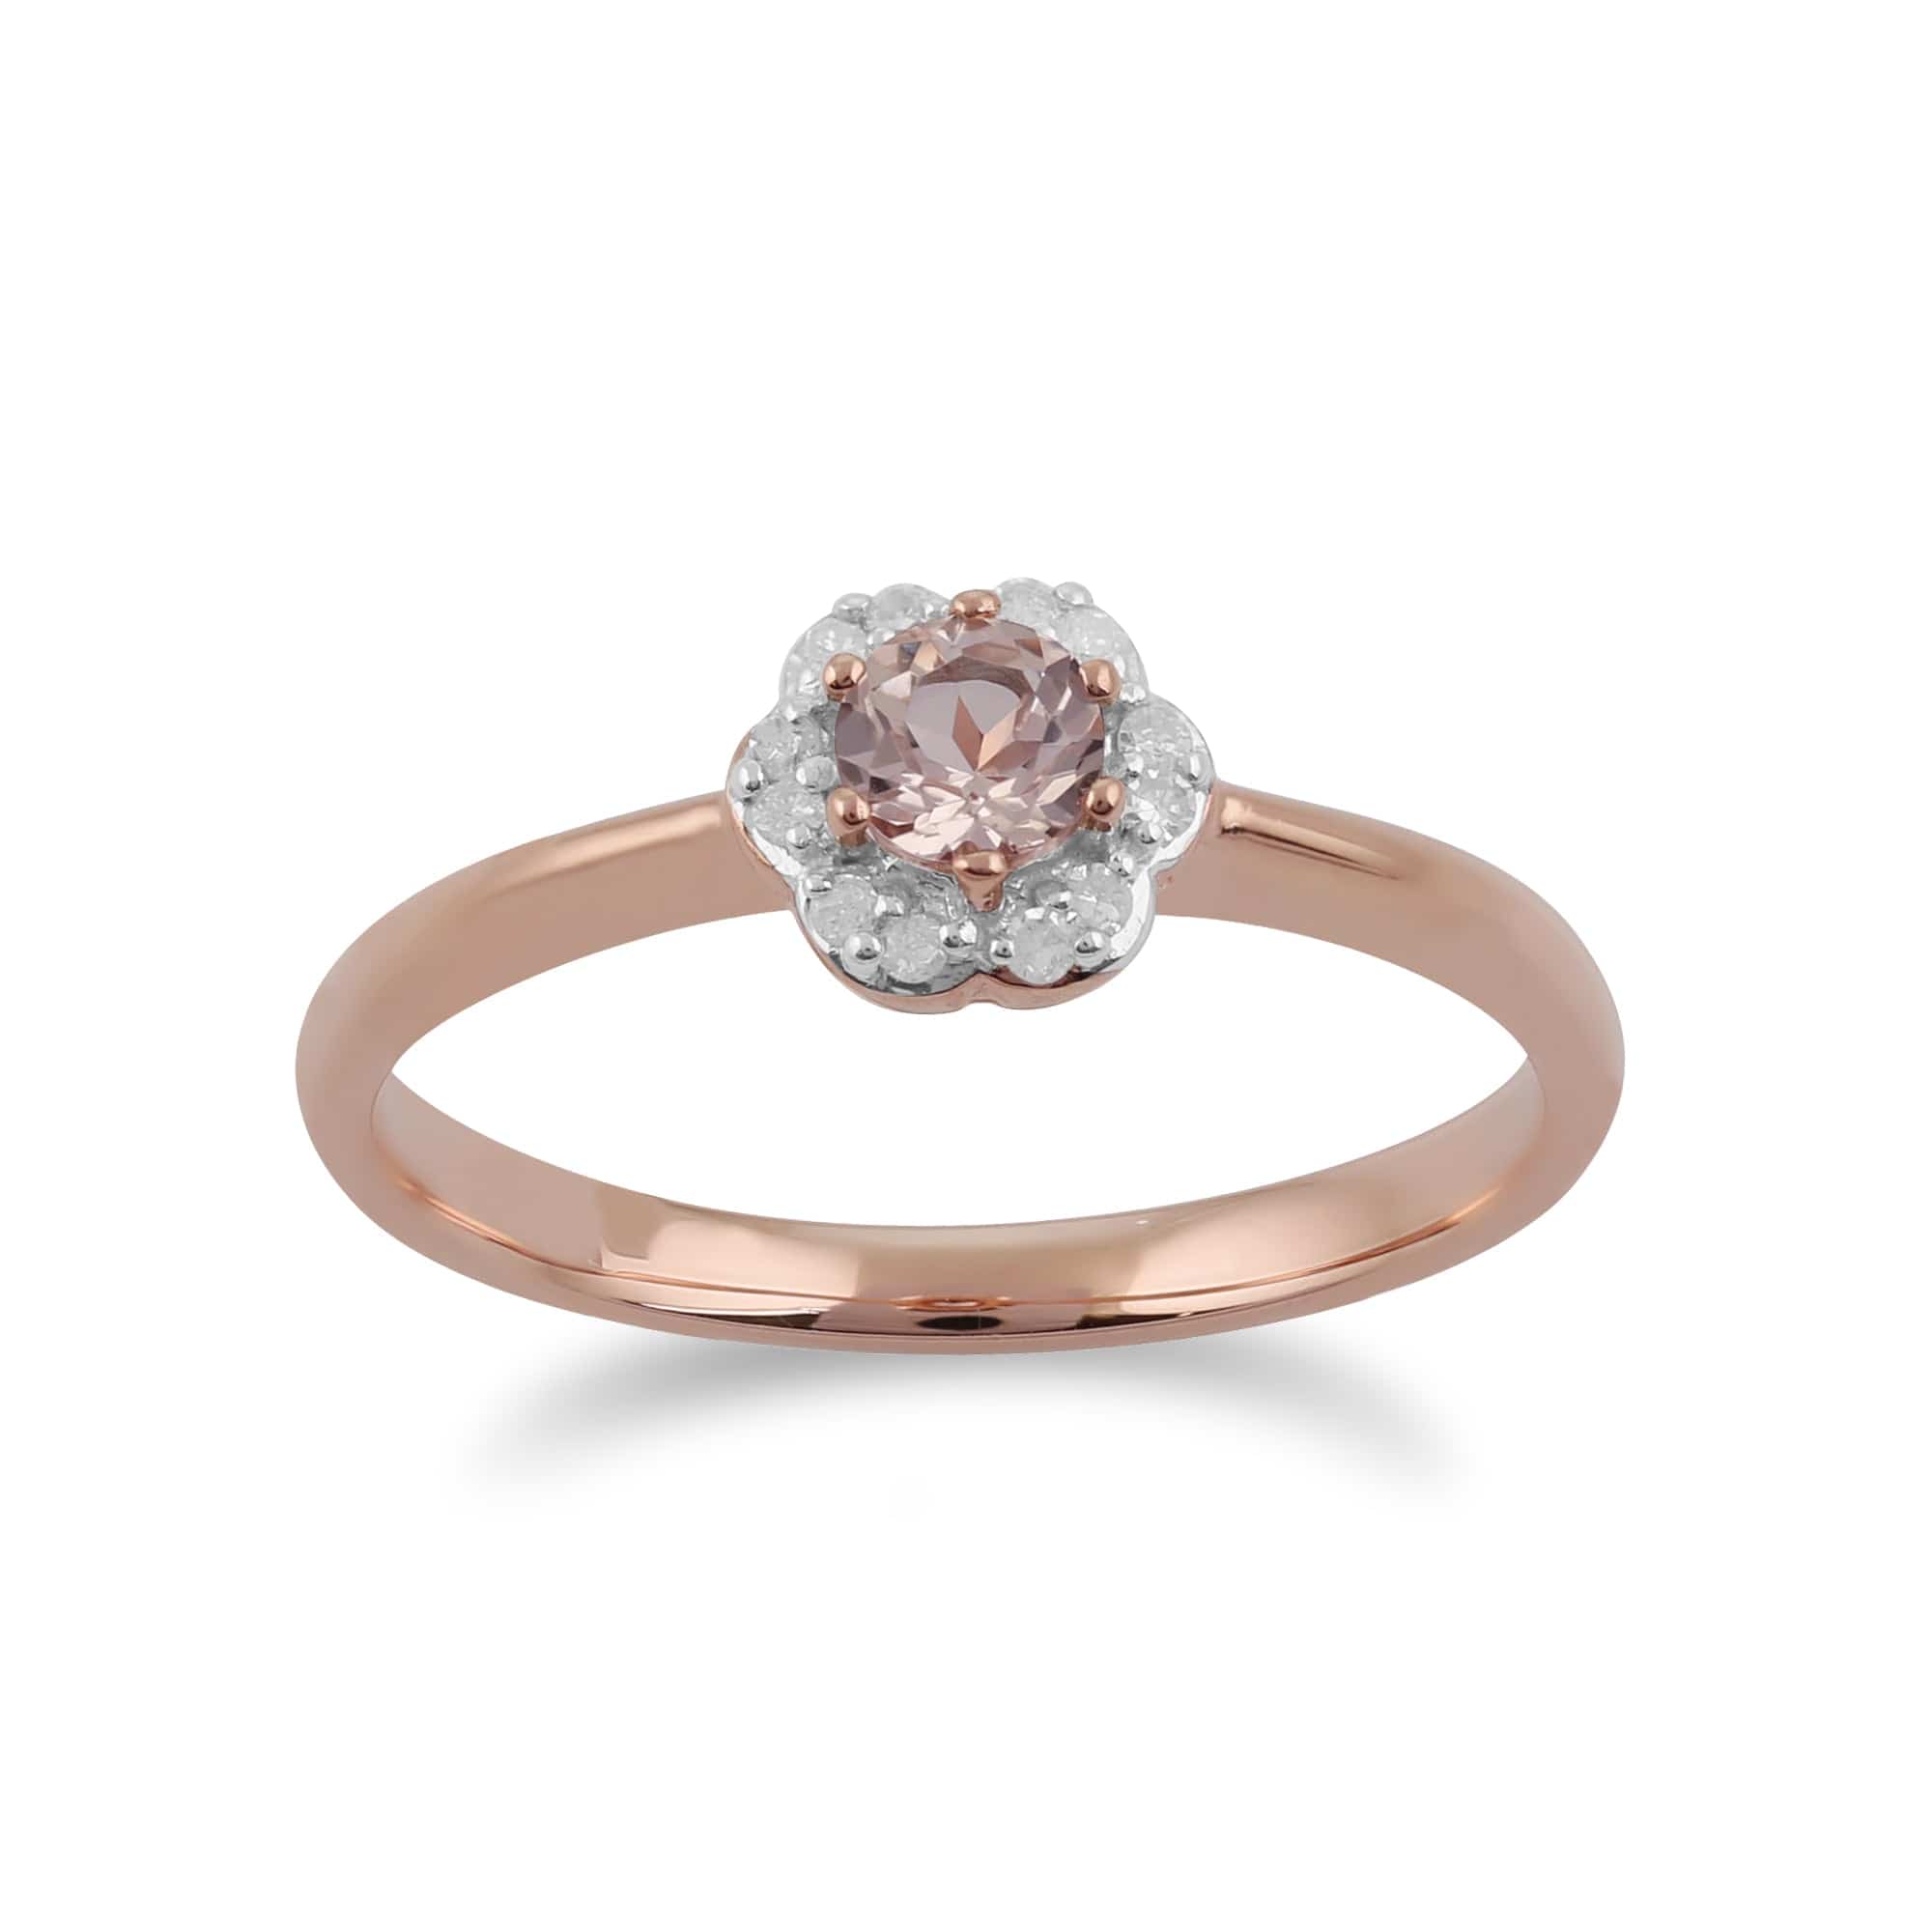 Floral Round Morganite & Diamond Pendant & Ring Set in 9ct Rose Gold - Gemondo